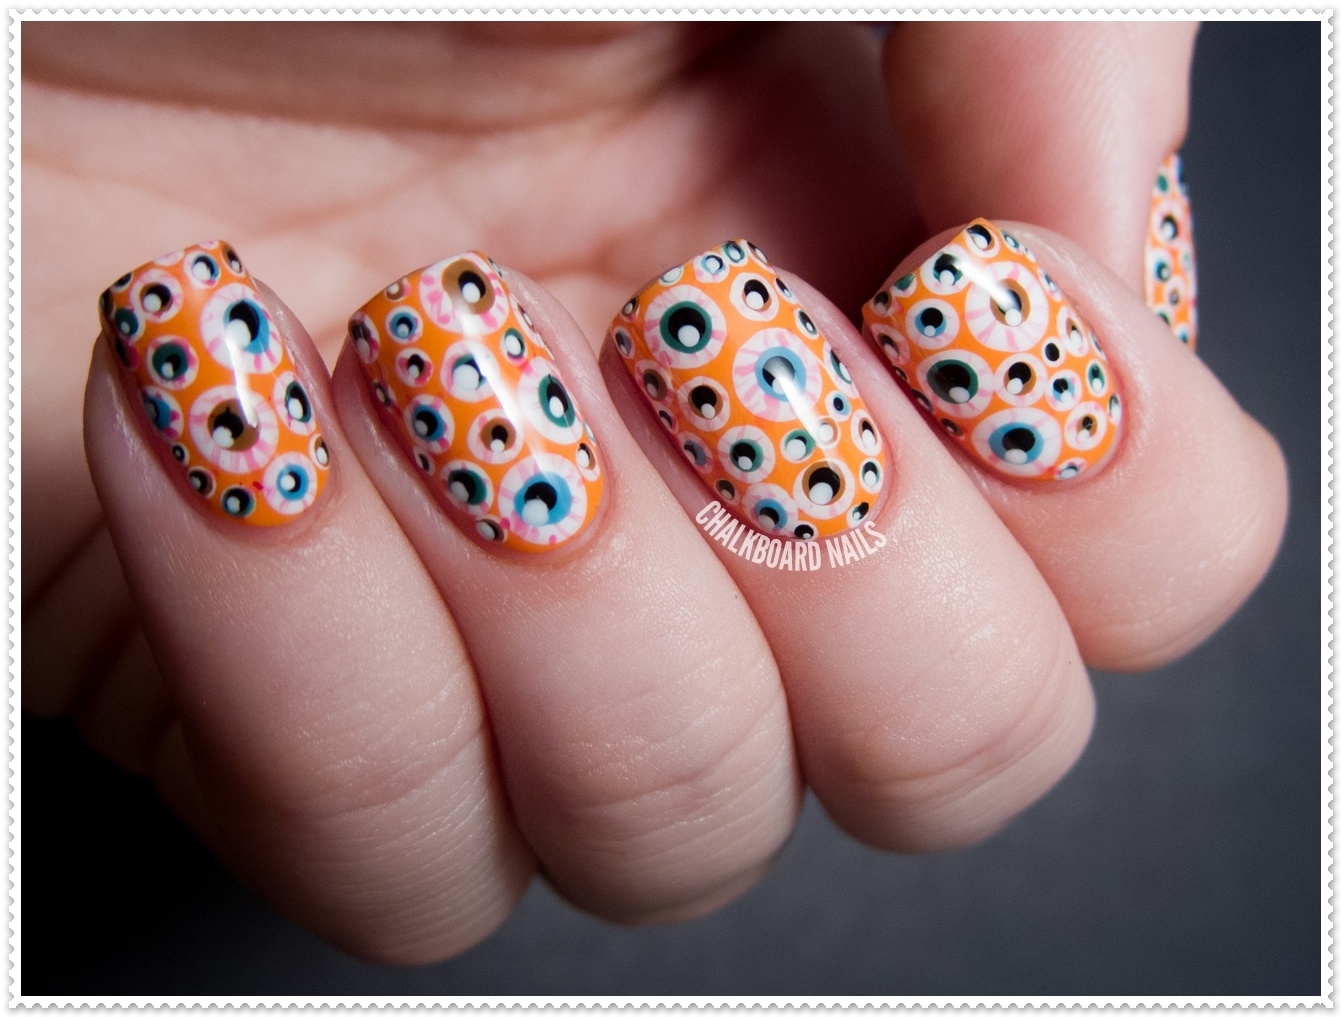 2. "Halloween Nail Art: Eyeball Nails" - wide 2